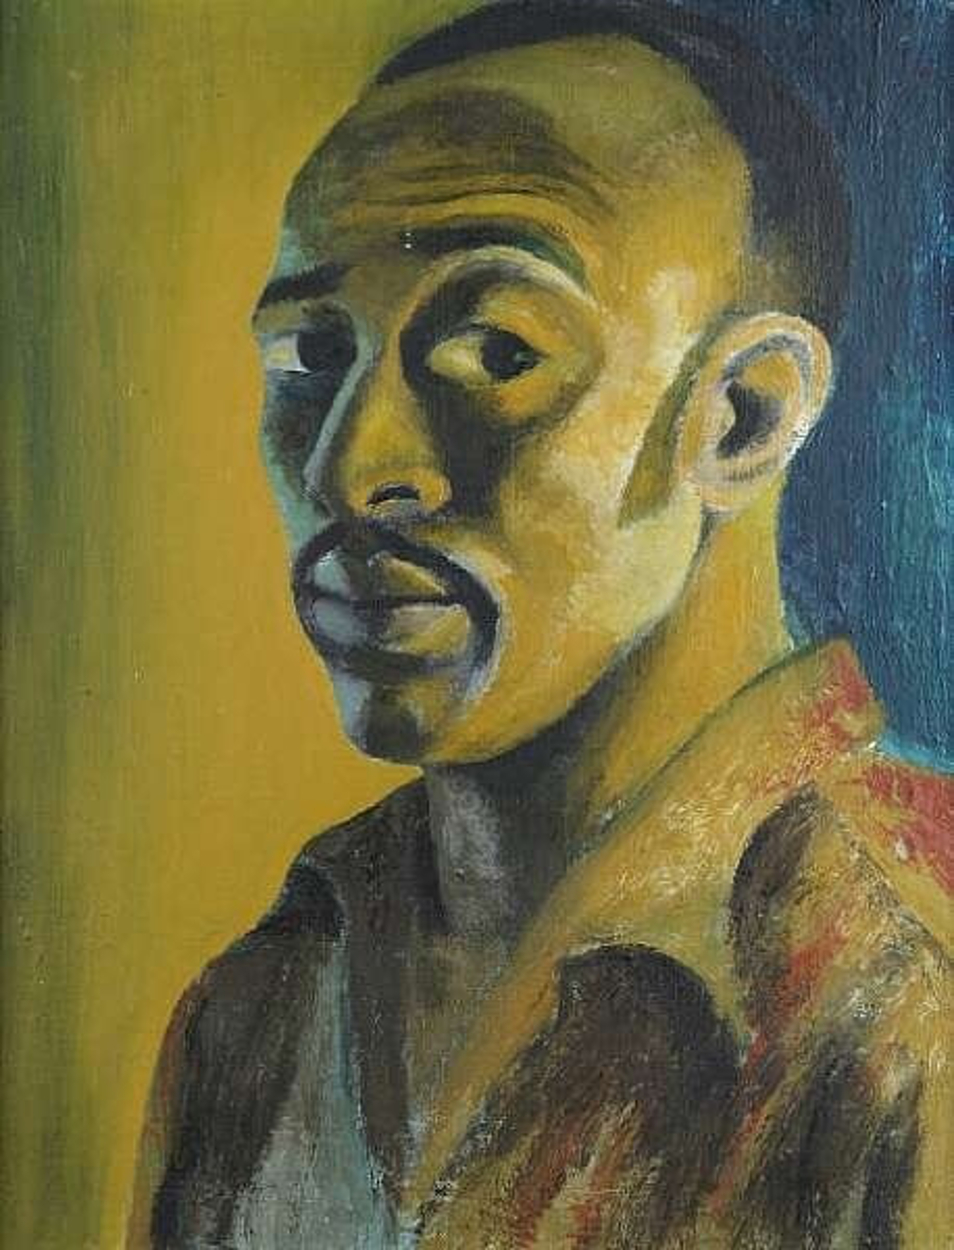 Gerard Sekoto - 9 dicembre 1913 - 20 marzo 1993